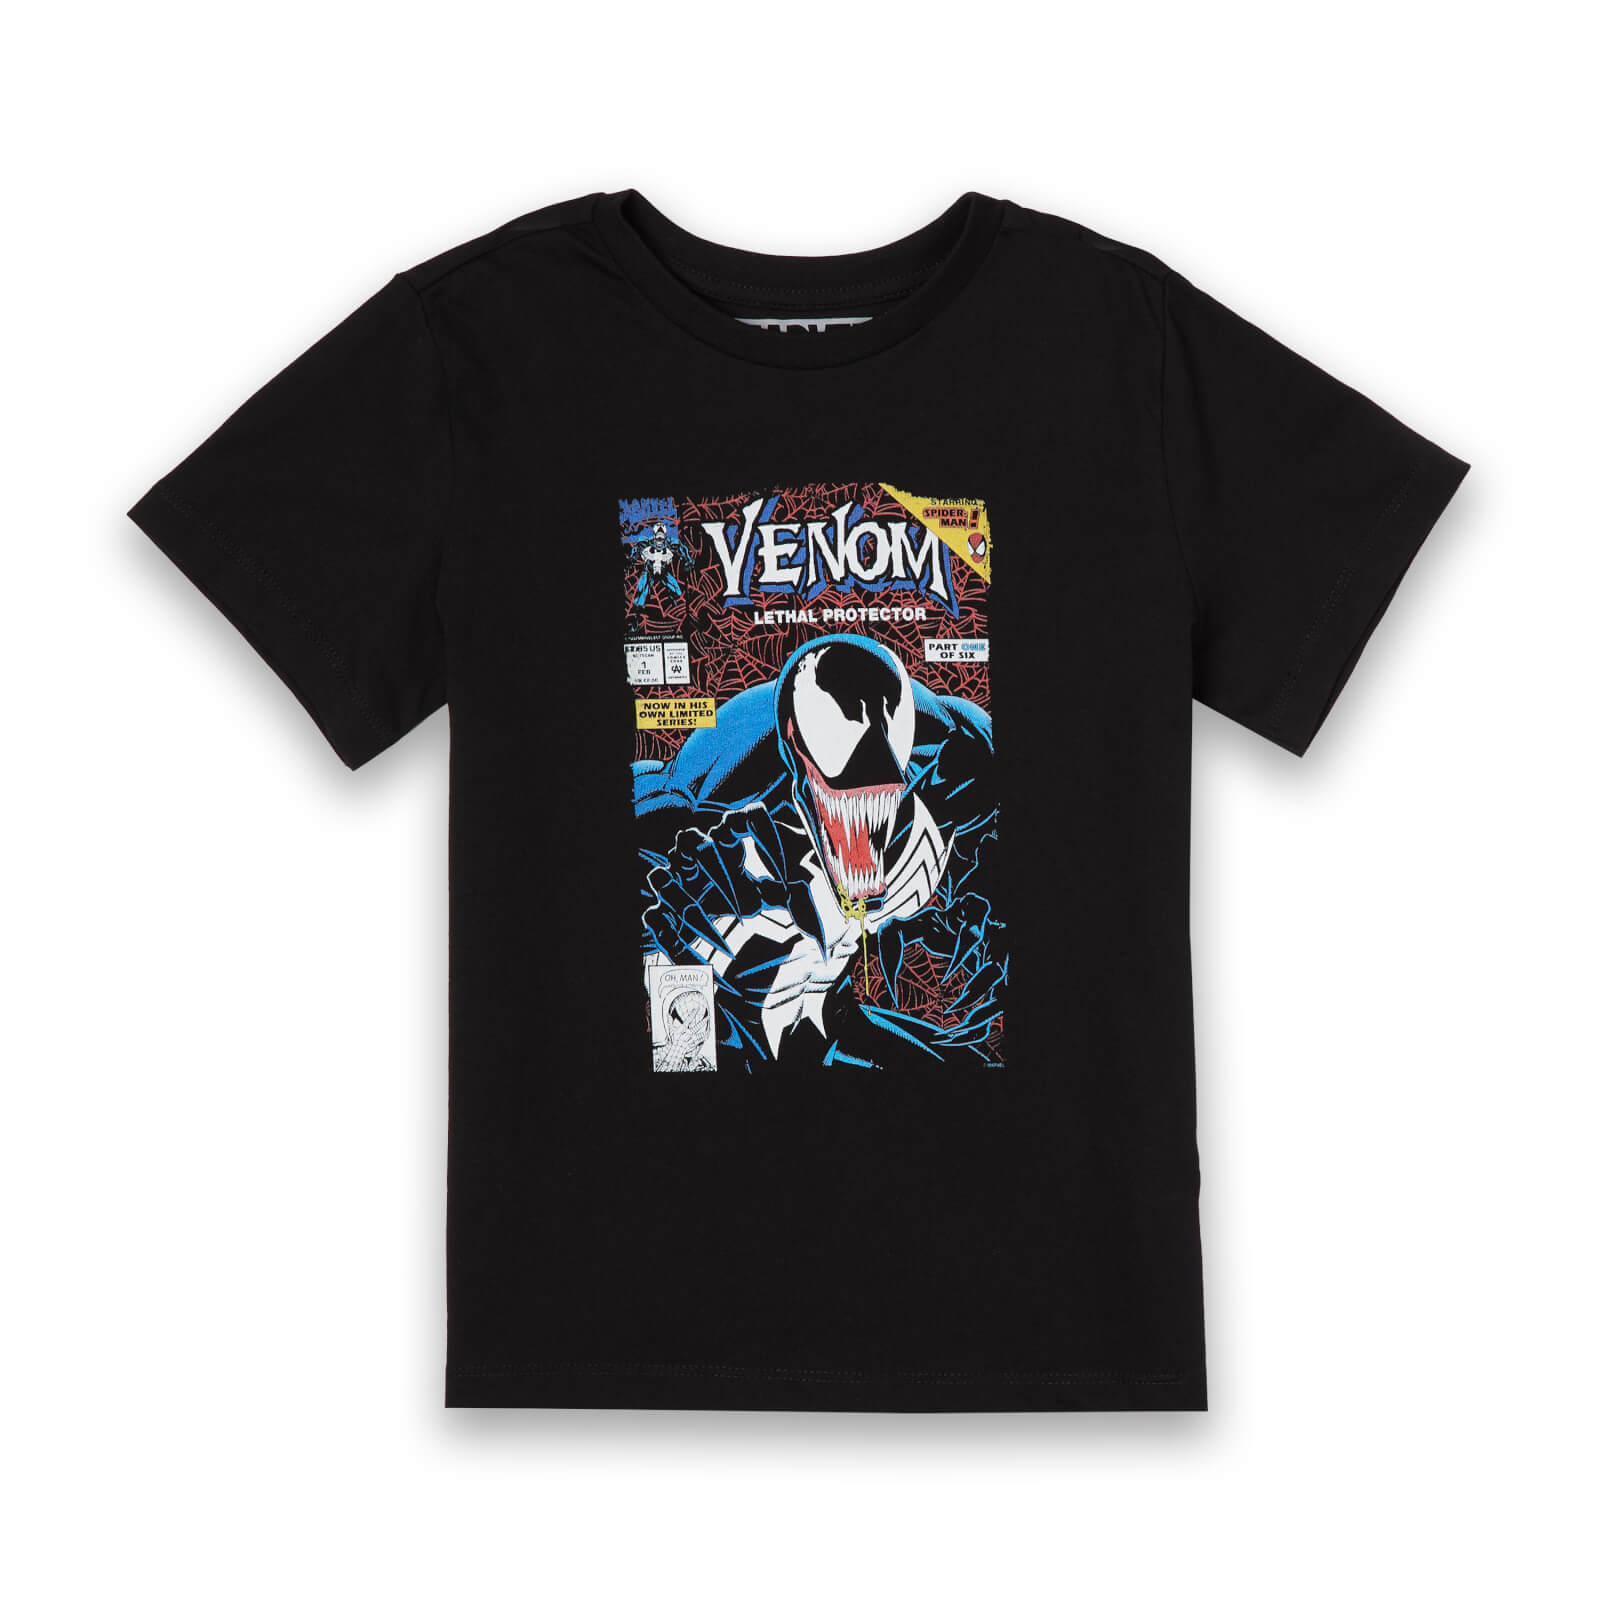 Venom Lethal Protector Kids' T-Shirt - Black - 9-10 Years